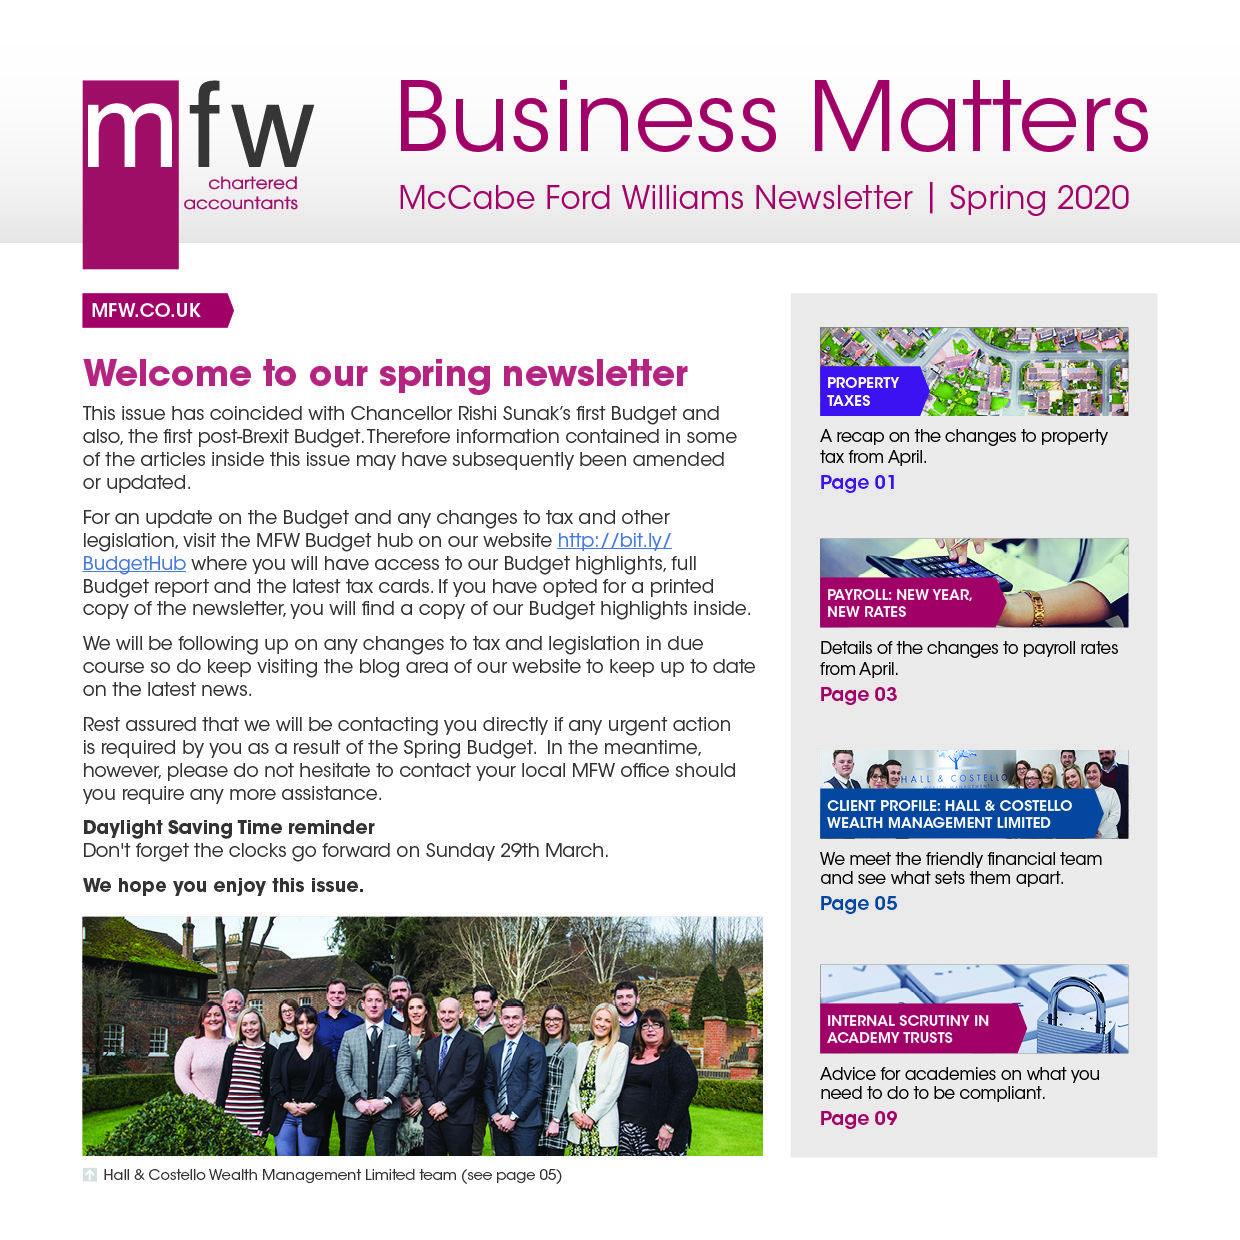 Business Matters newsletter spring 2020